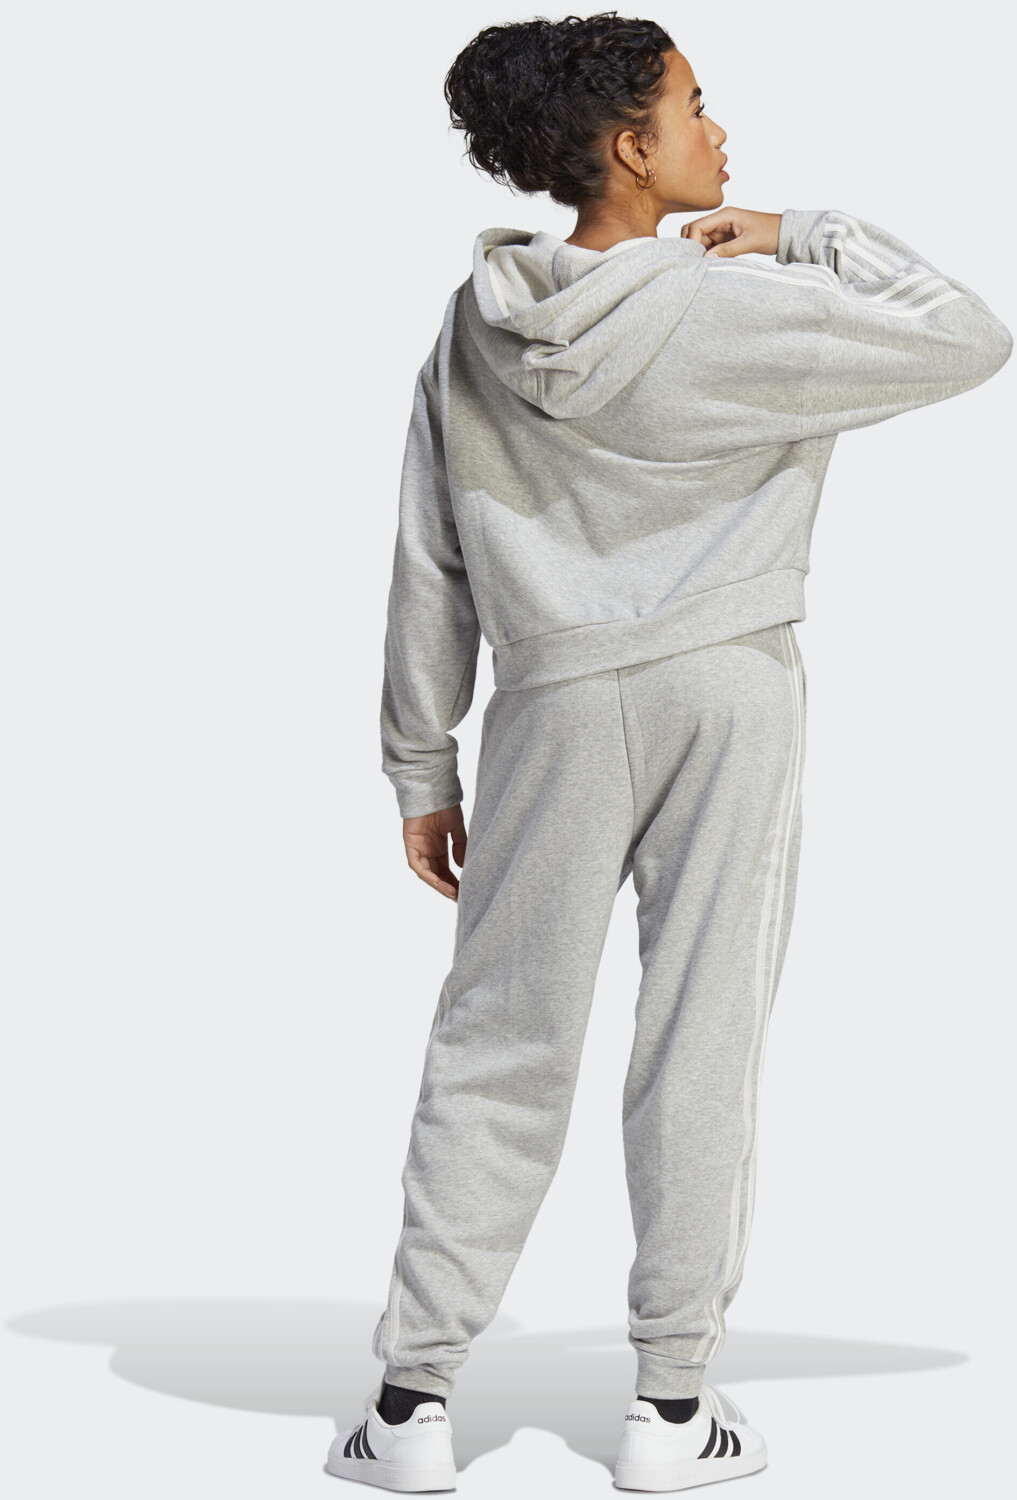 Adidas Energize Trainingsanzug medium grey heather ab 59,95 € |  Preisvergleich bei